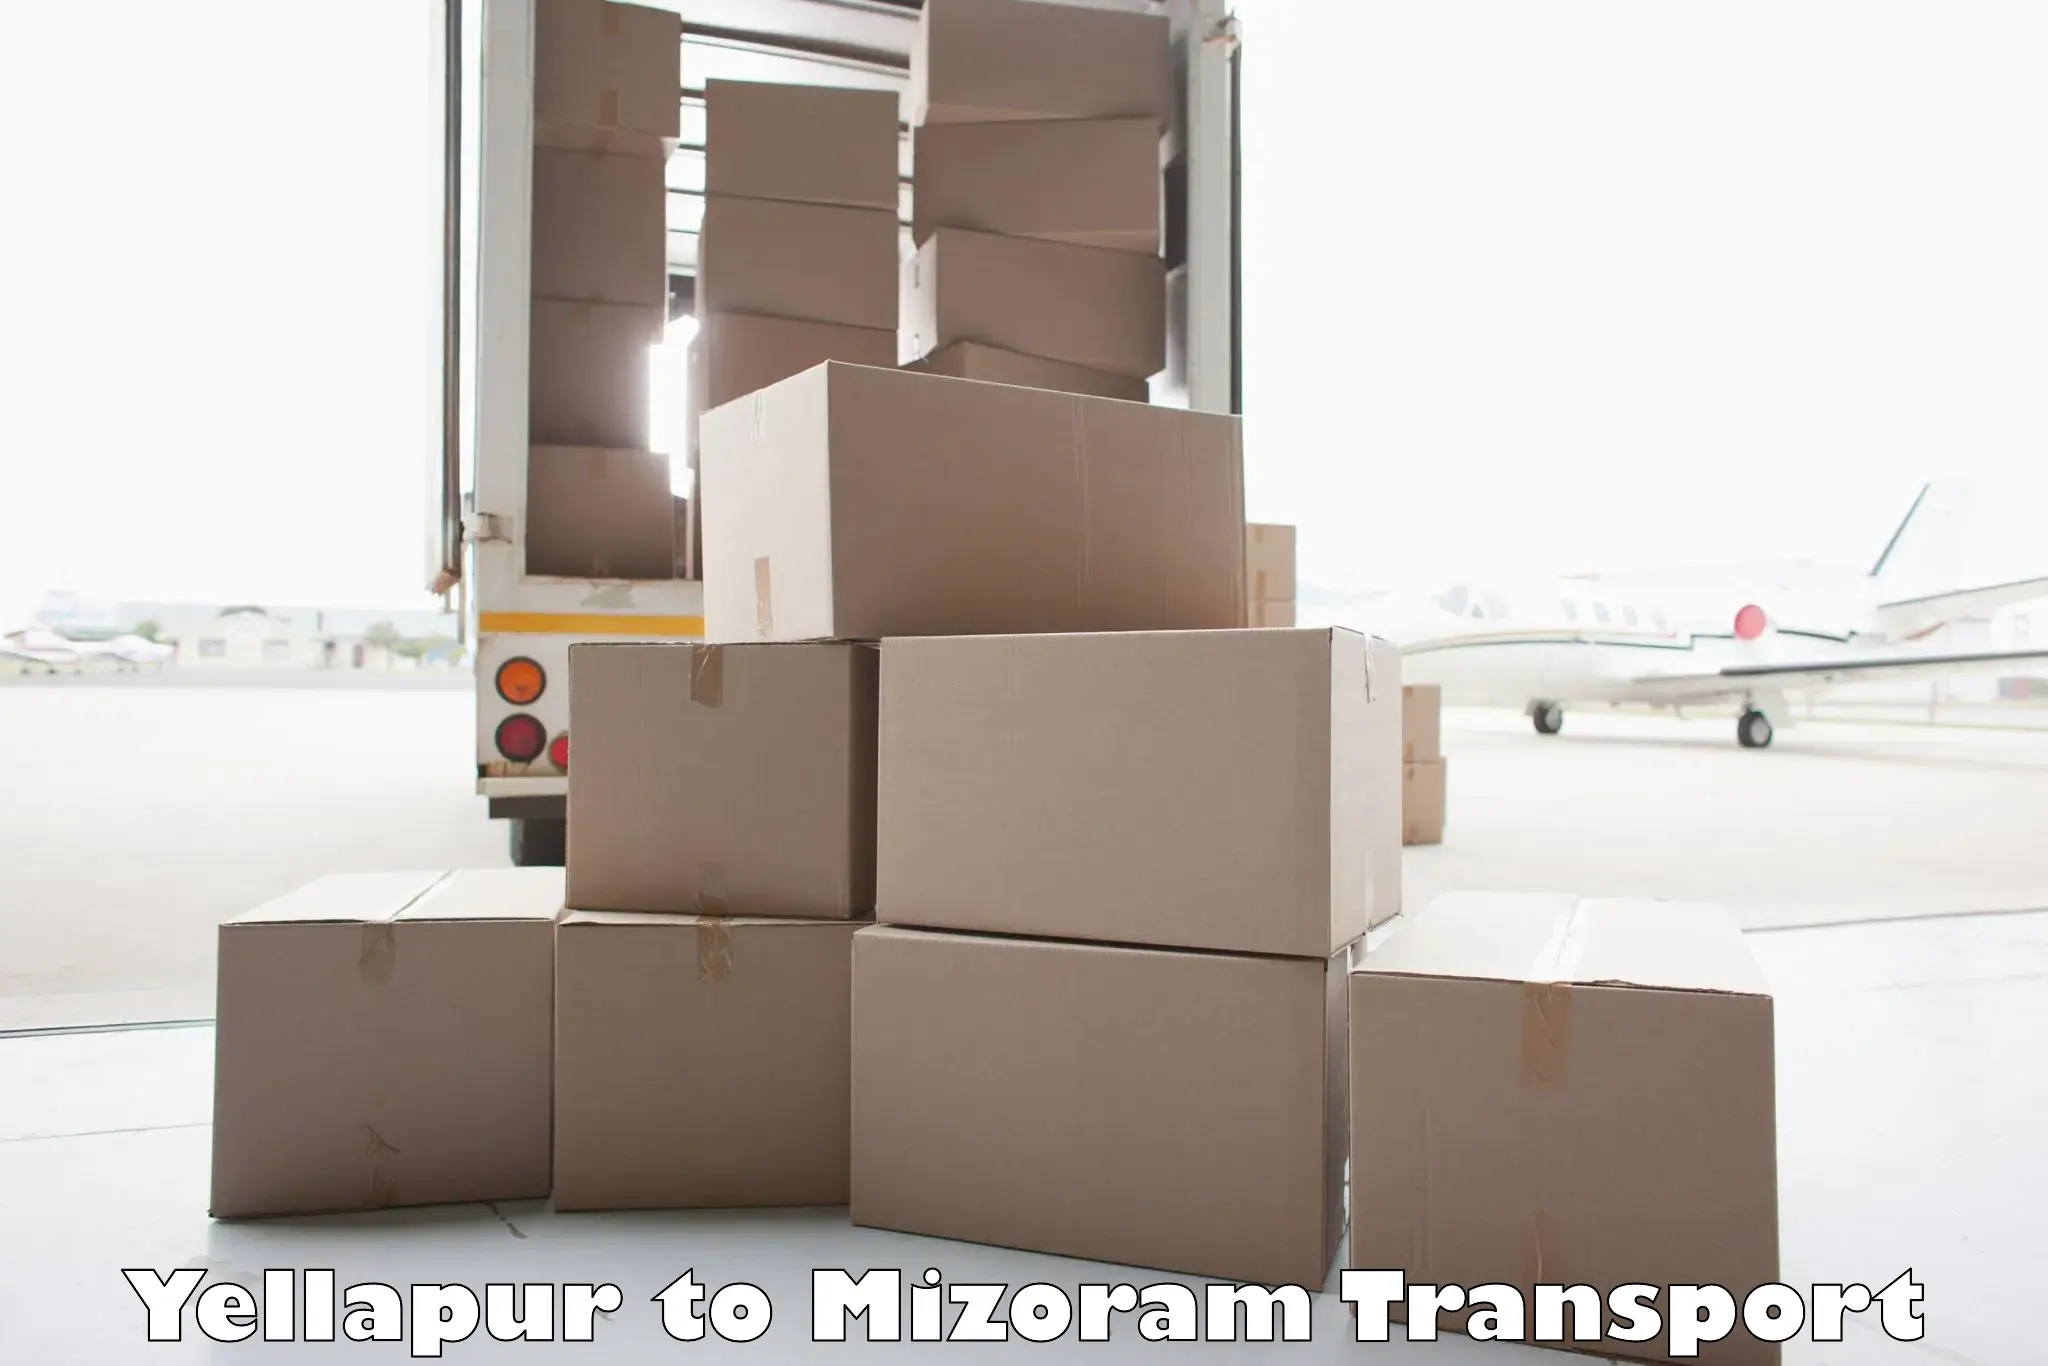 Daily parcel service transport Yellapur to Aizawl